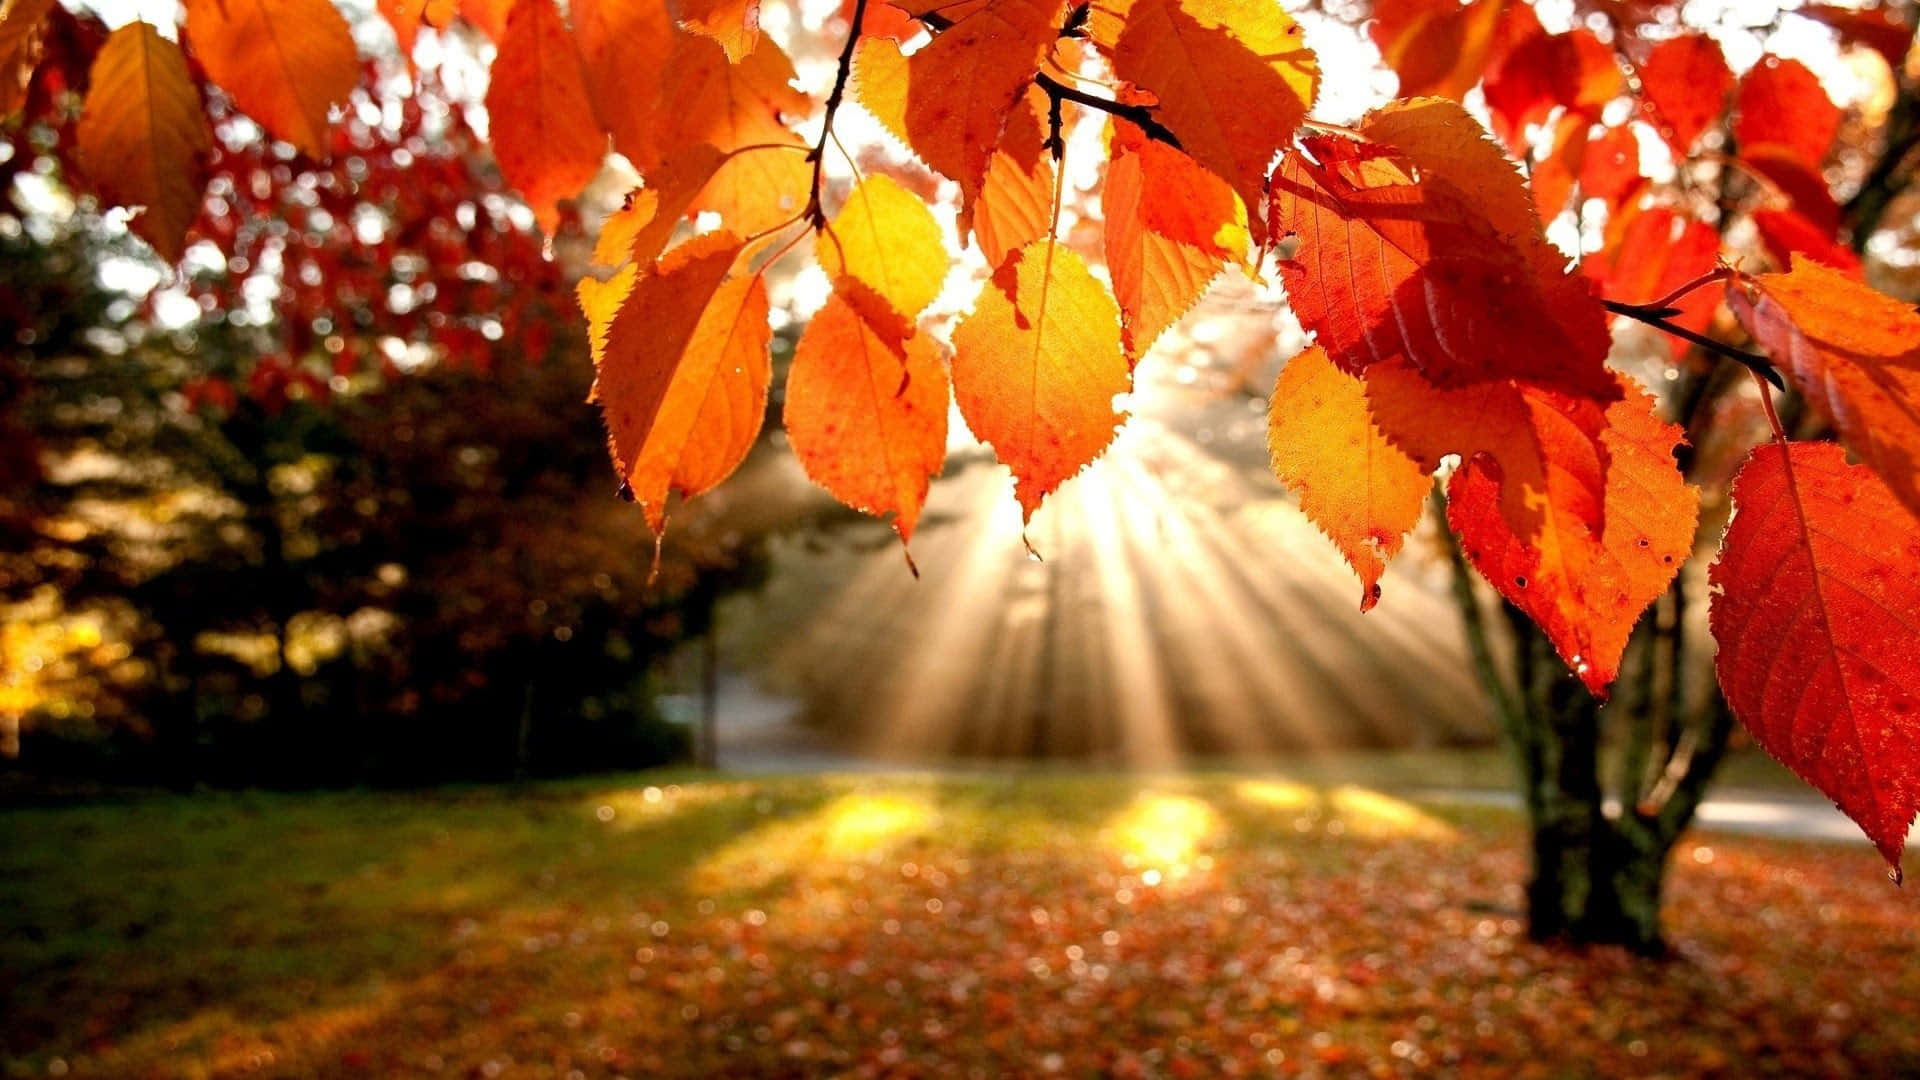 Appreciate the beauty of nature this autumn season Wallpaper